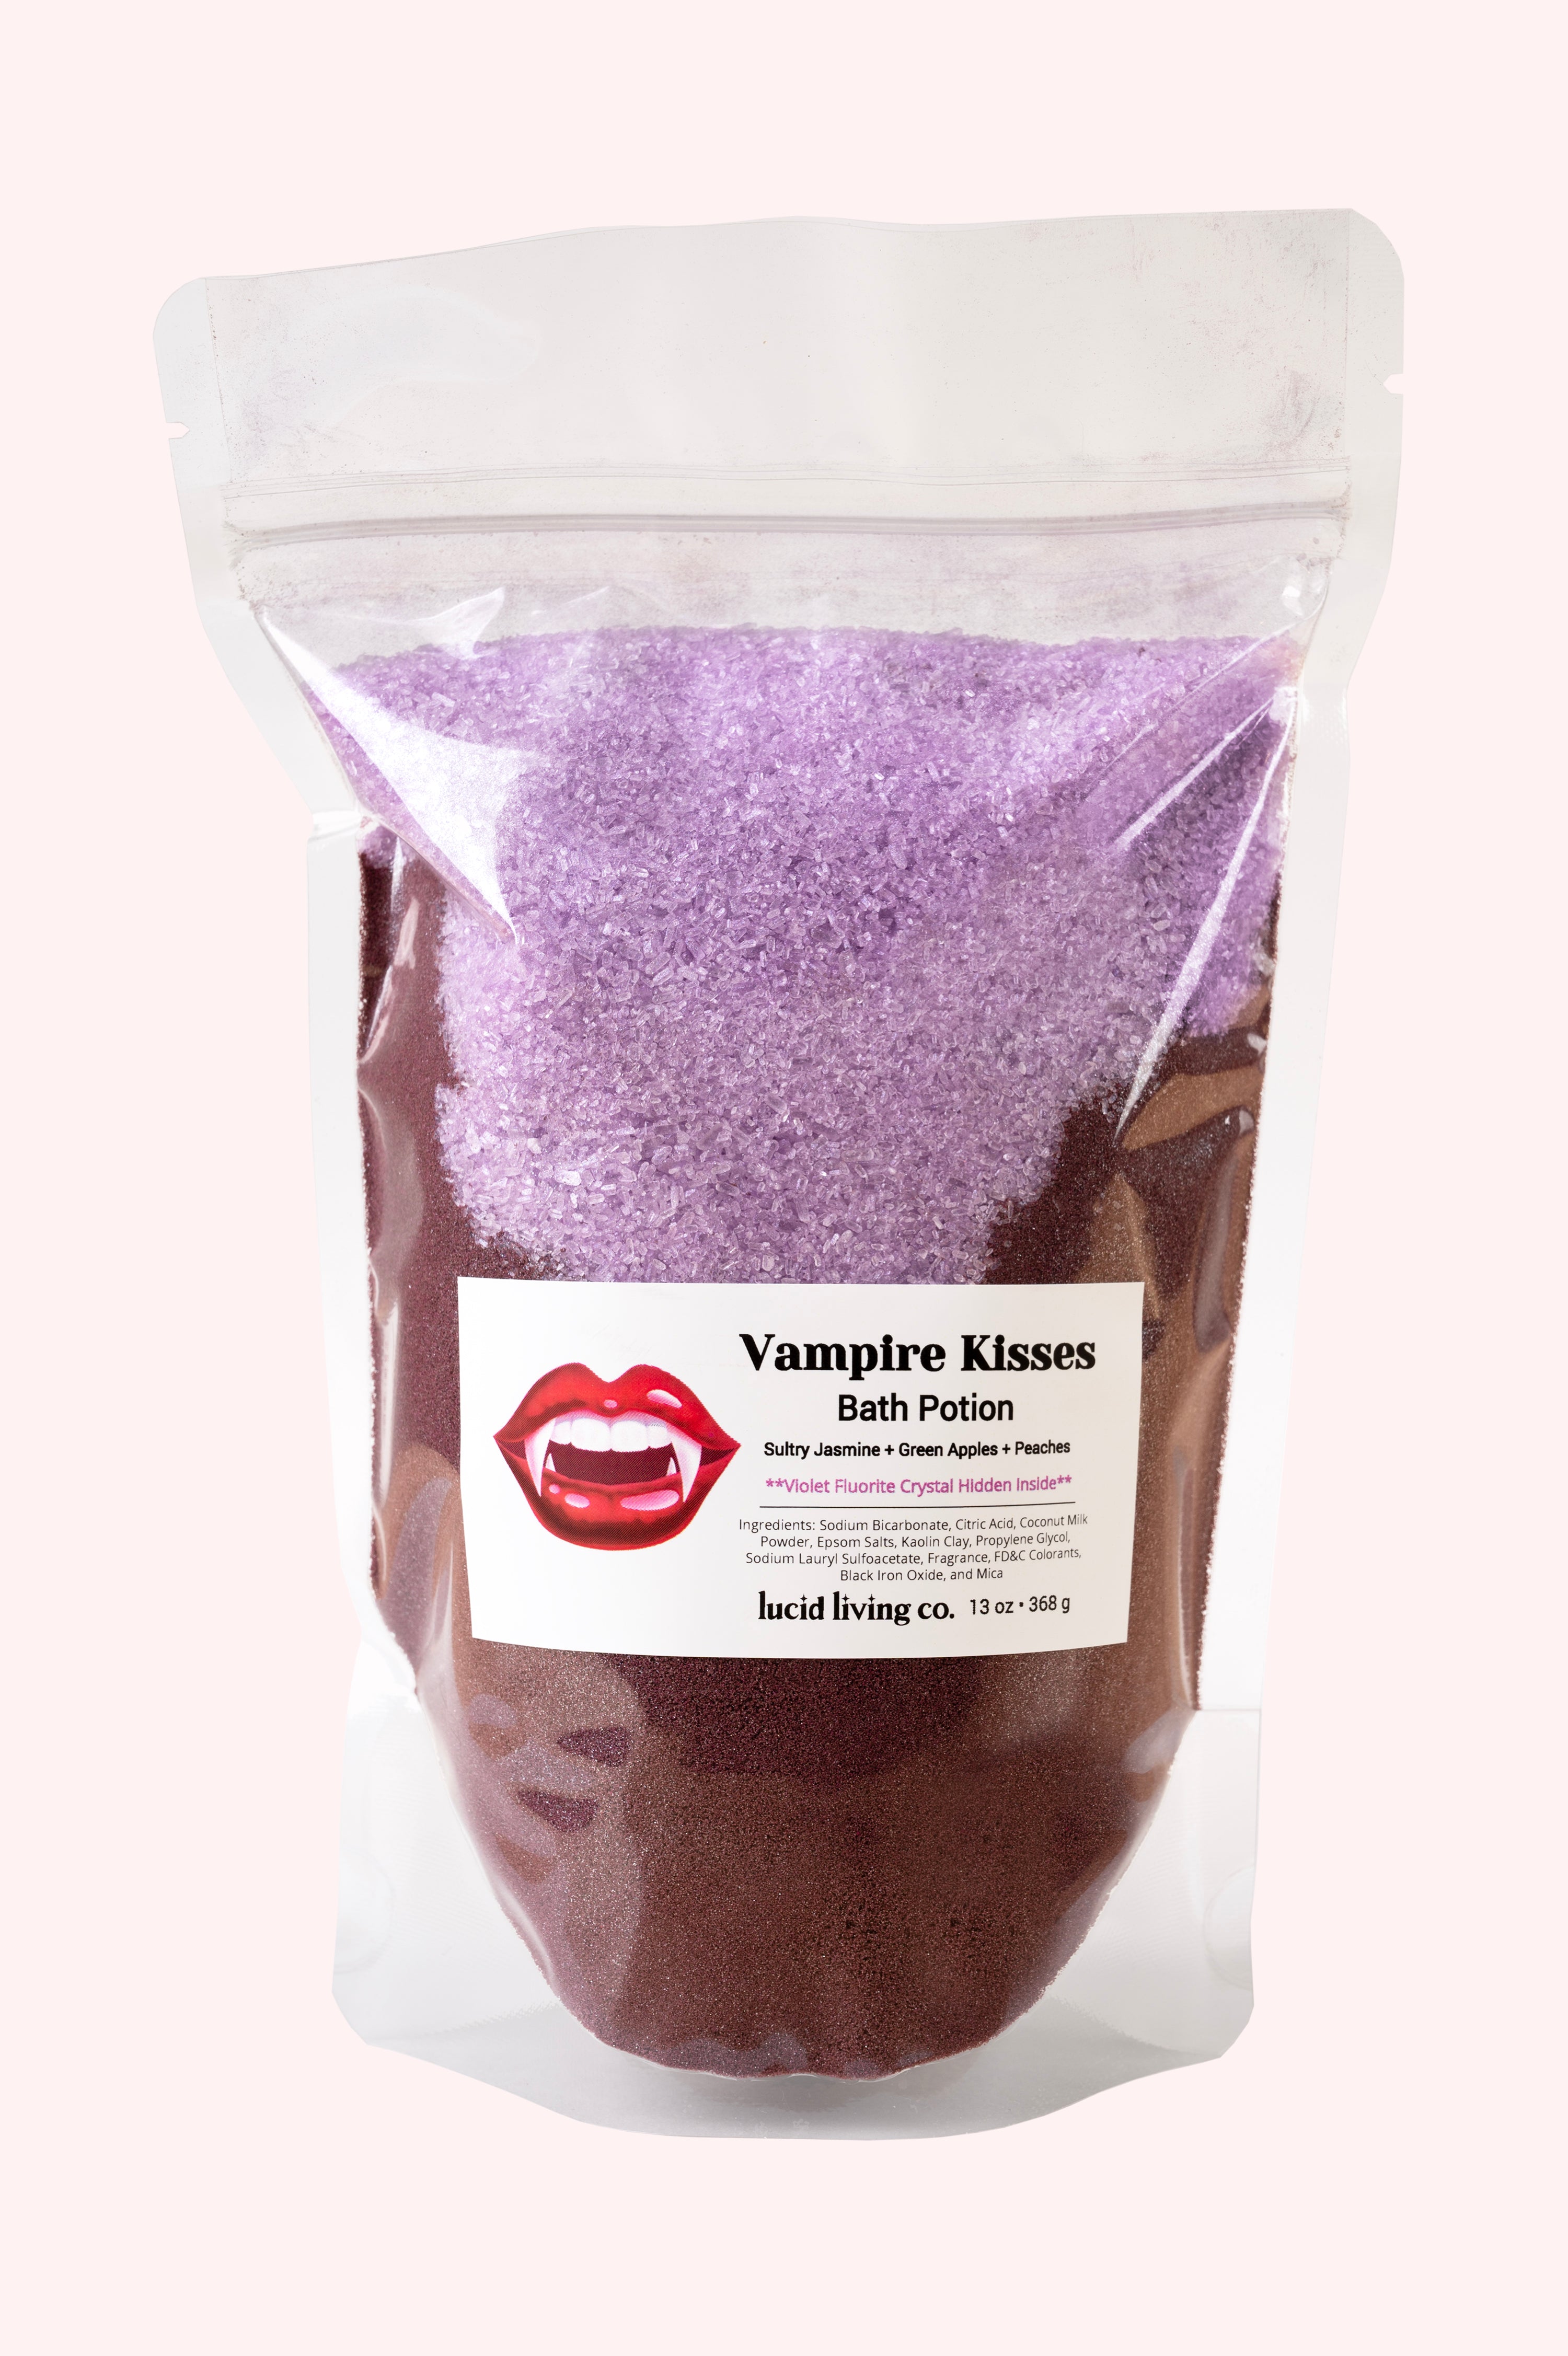 Vampire Kisses Bath Potion